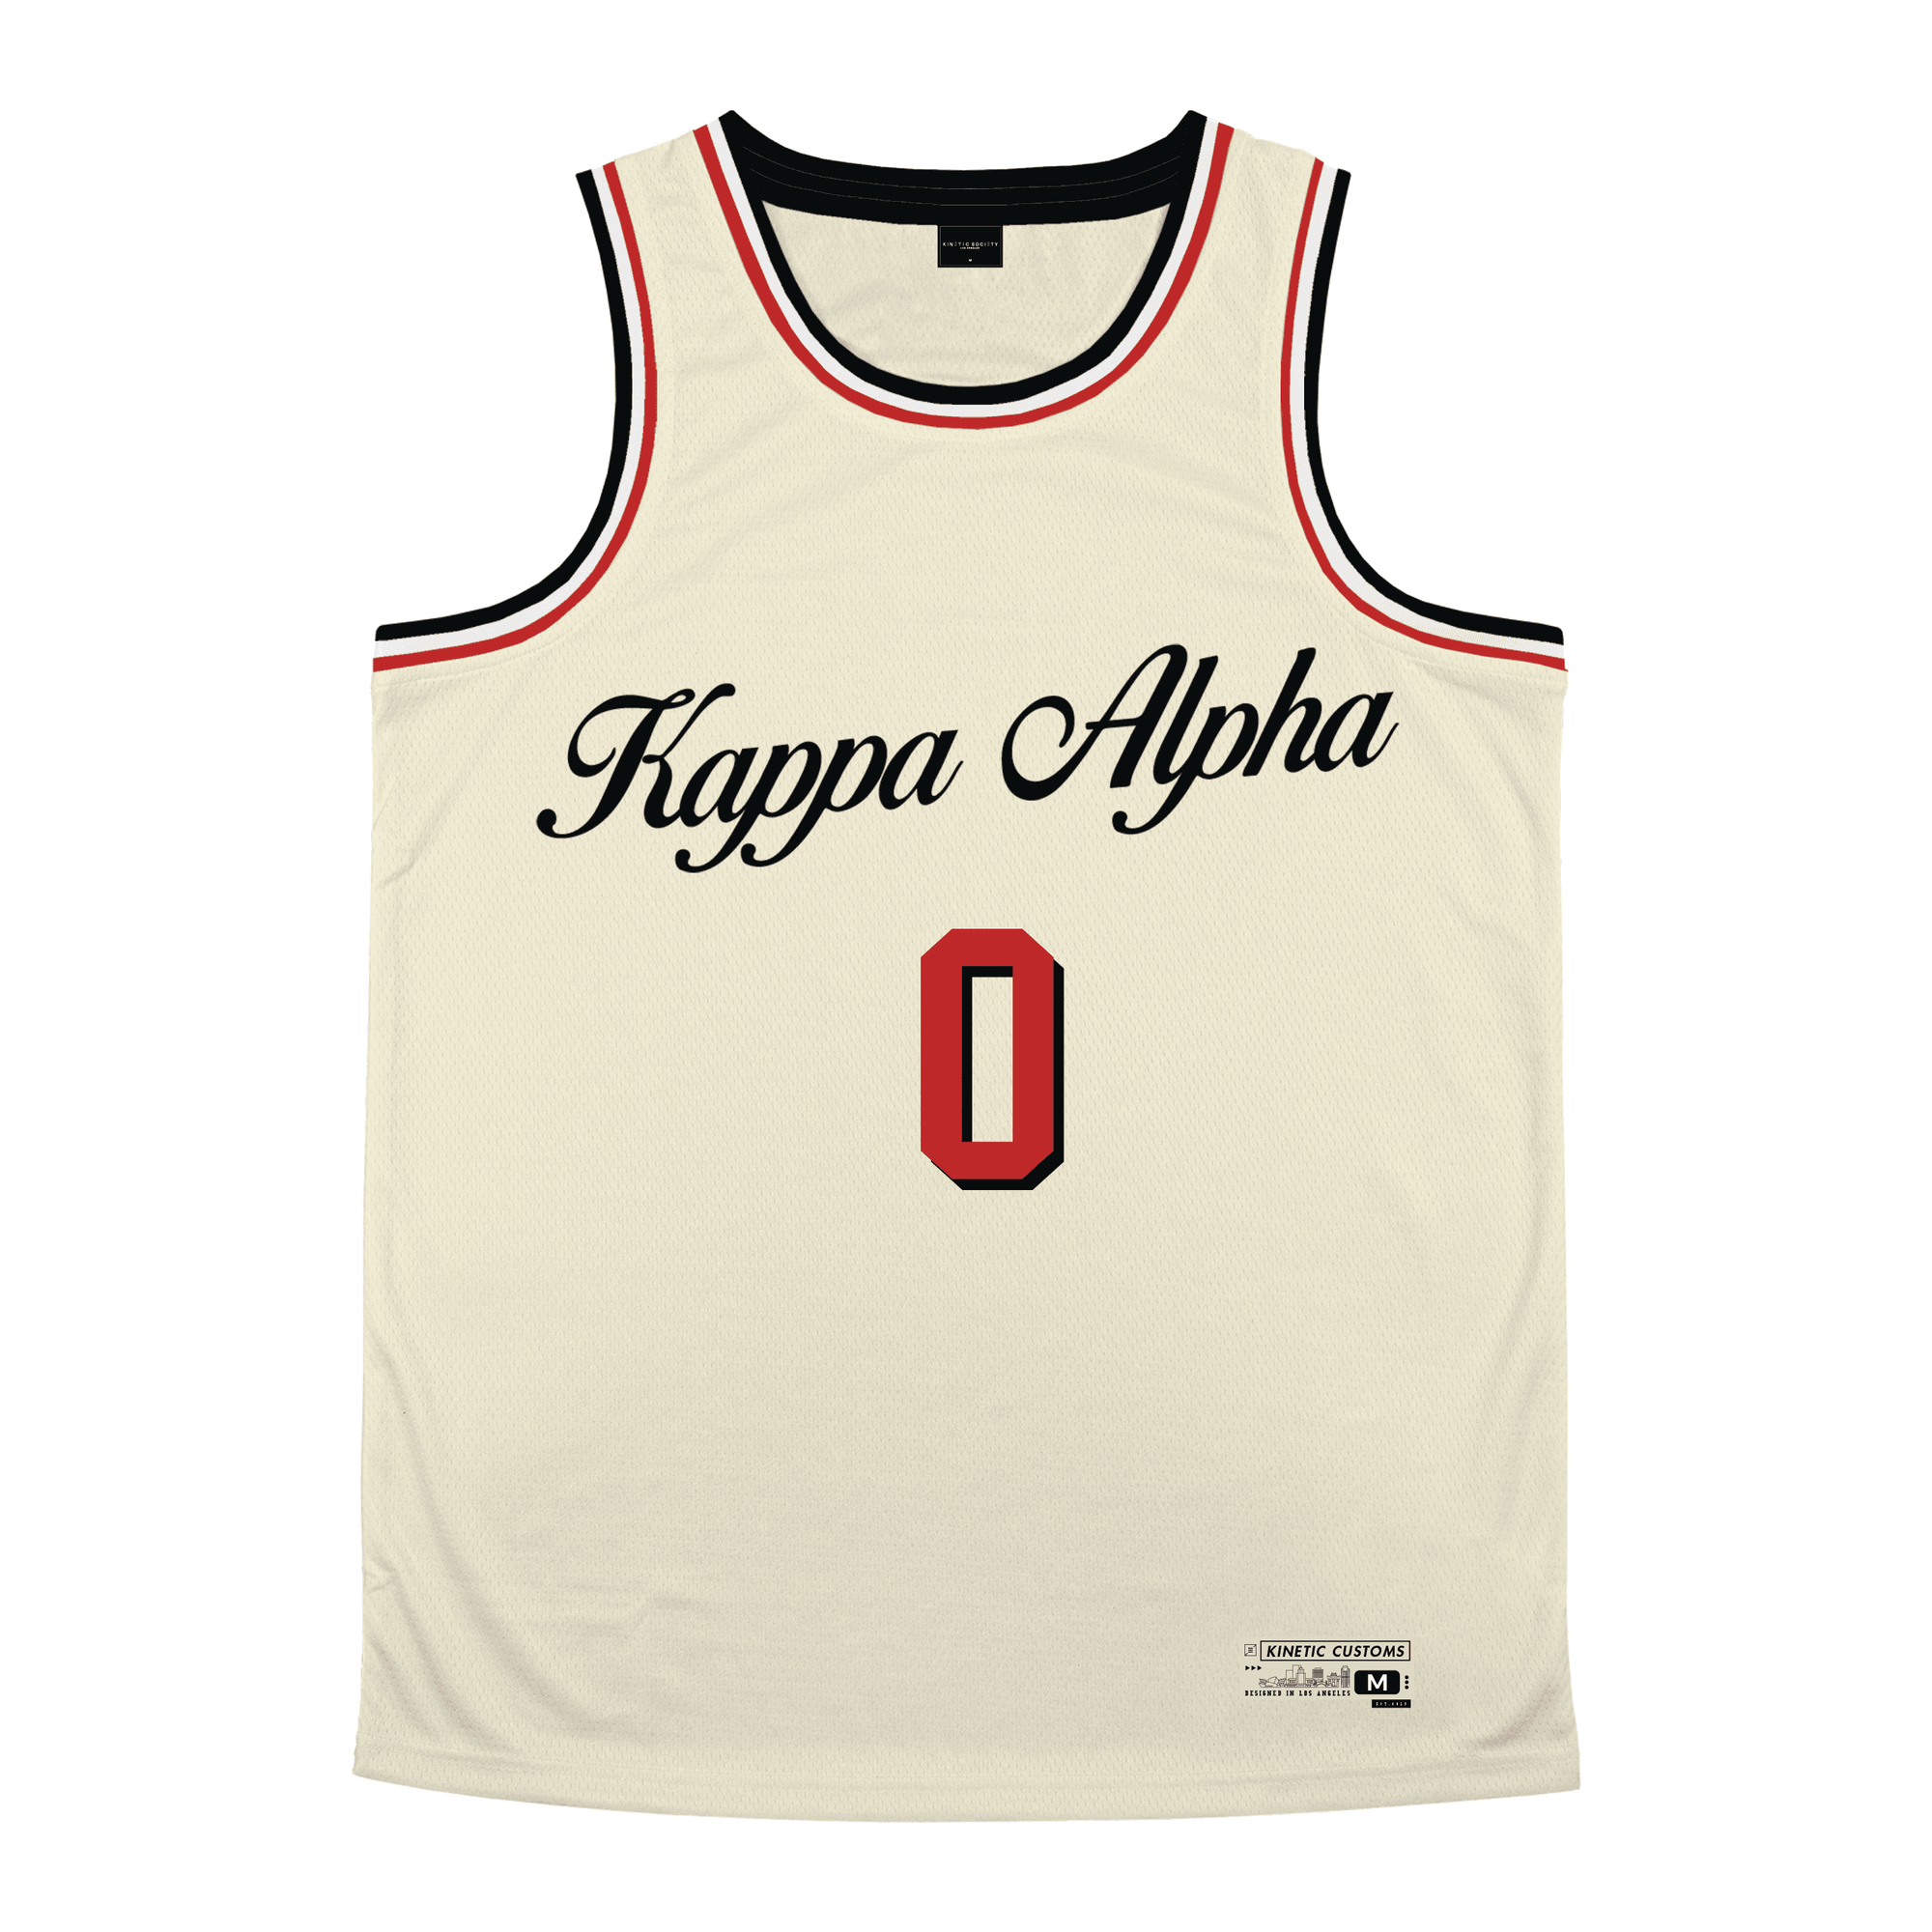 Kappa Alpha Order - VIntage Cream Basketball Jersey